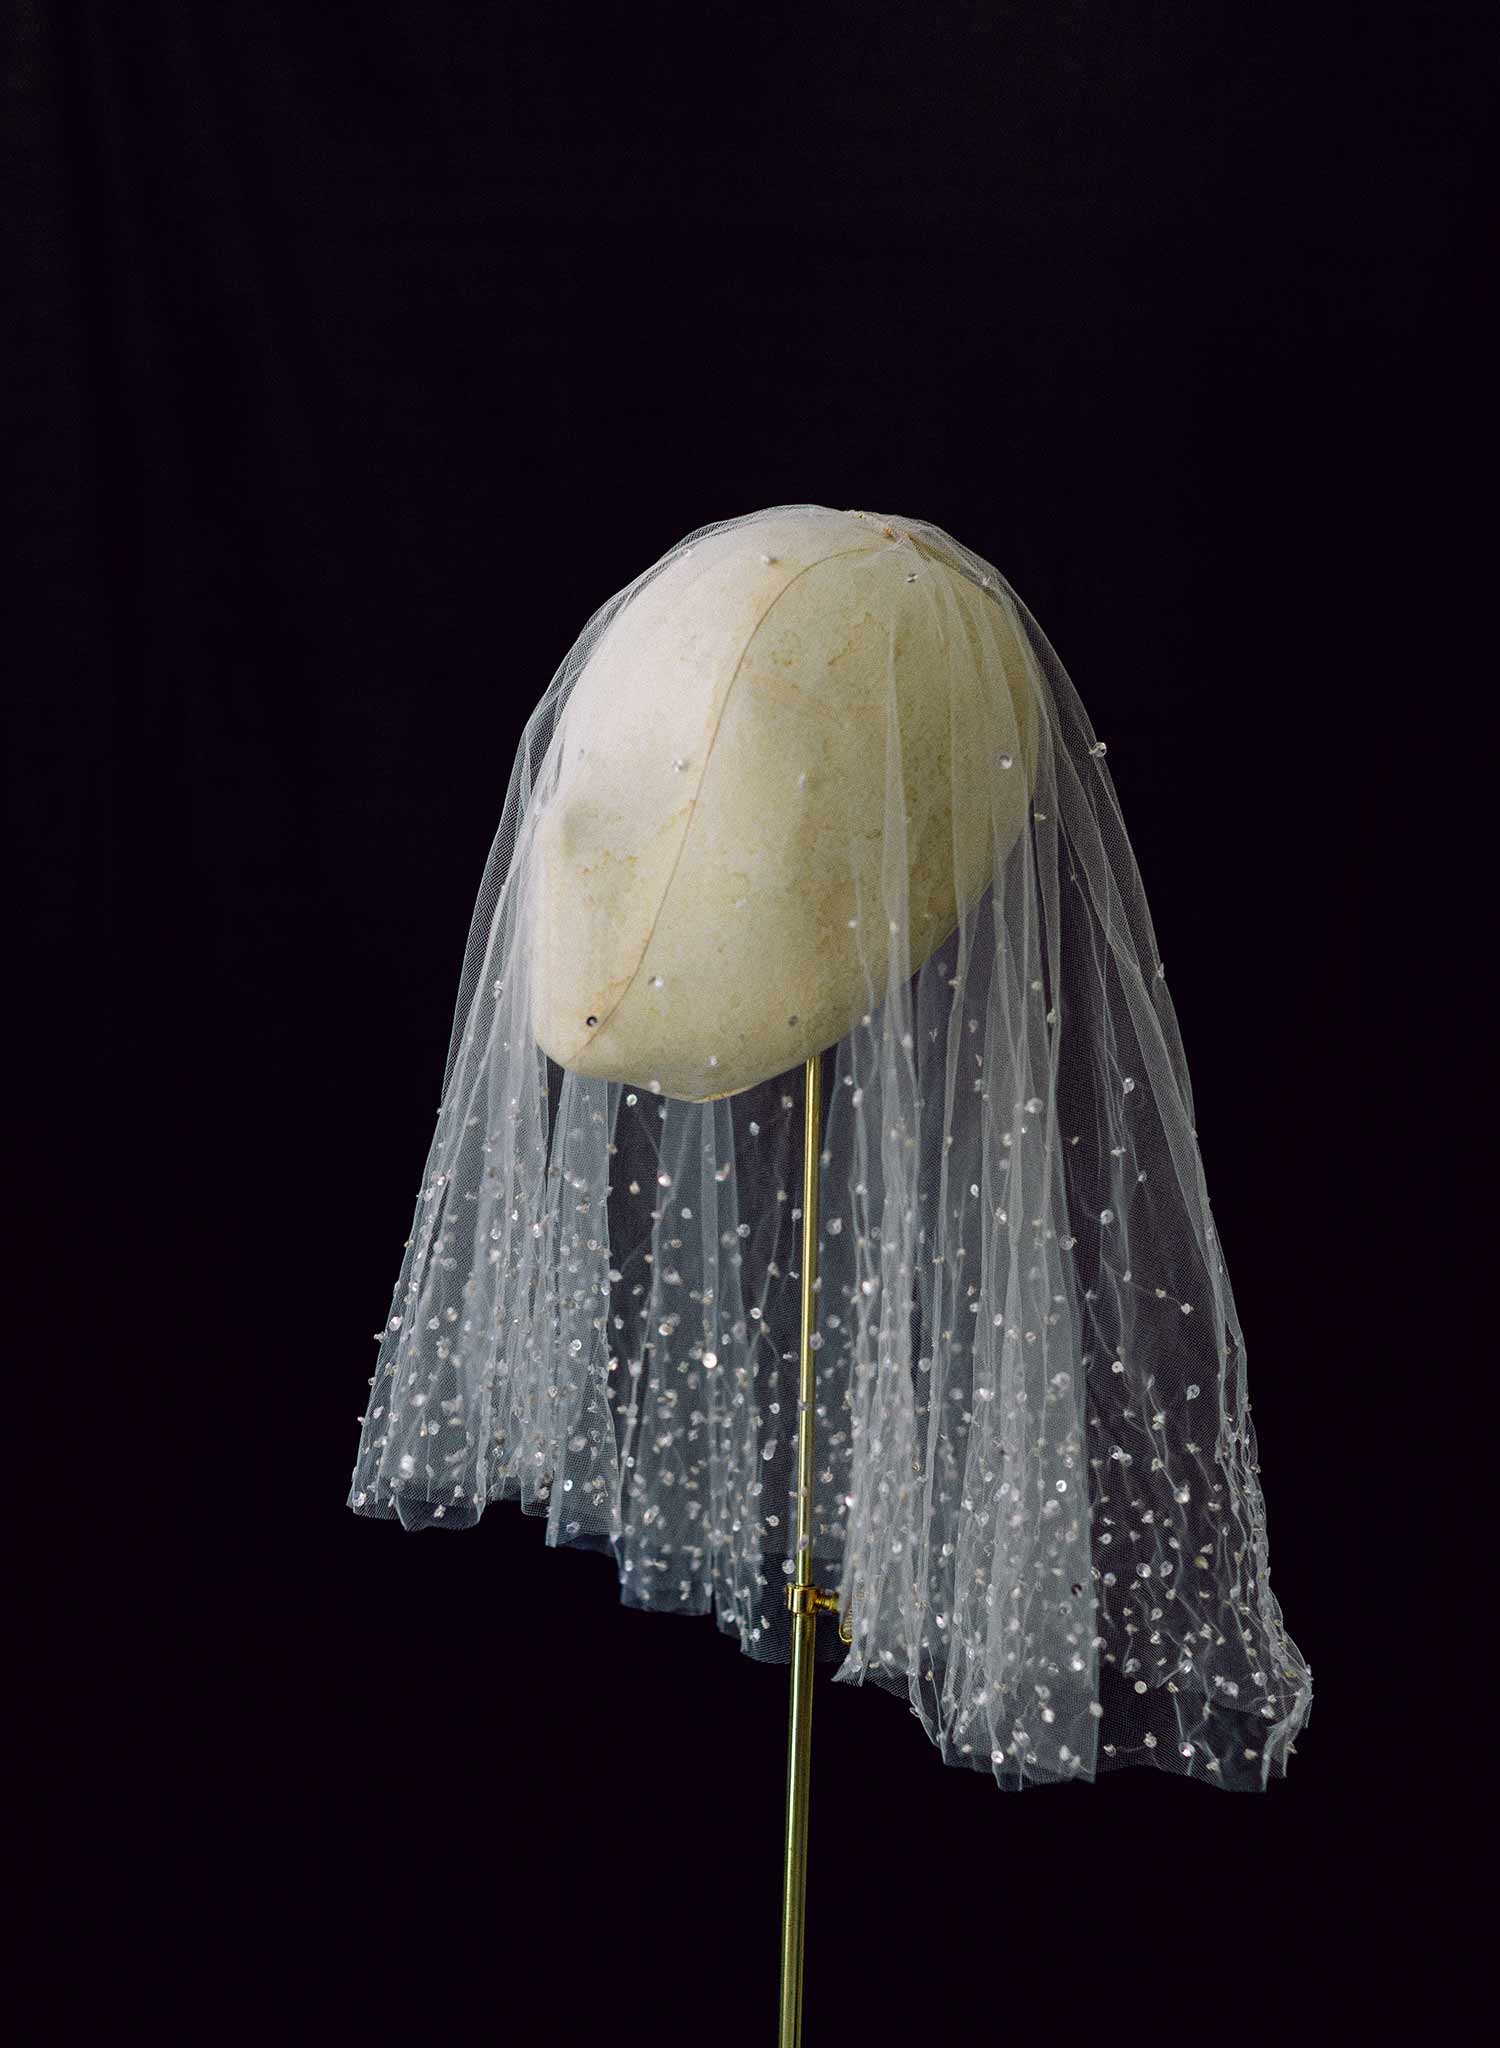 Ivory Veil with Mini Bows & Pearl Beads, Sparkle Veil Short First Communion  Veil